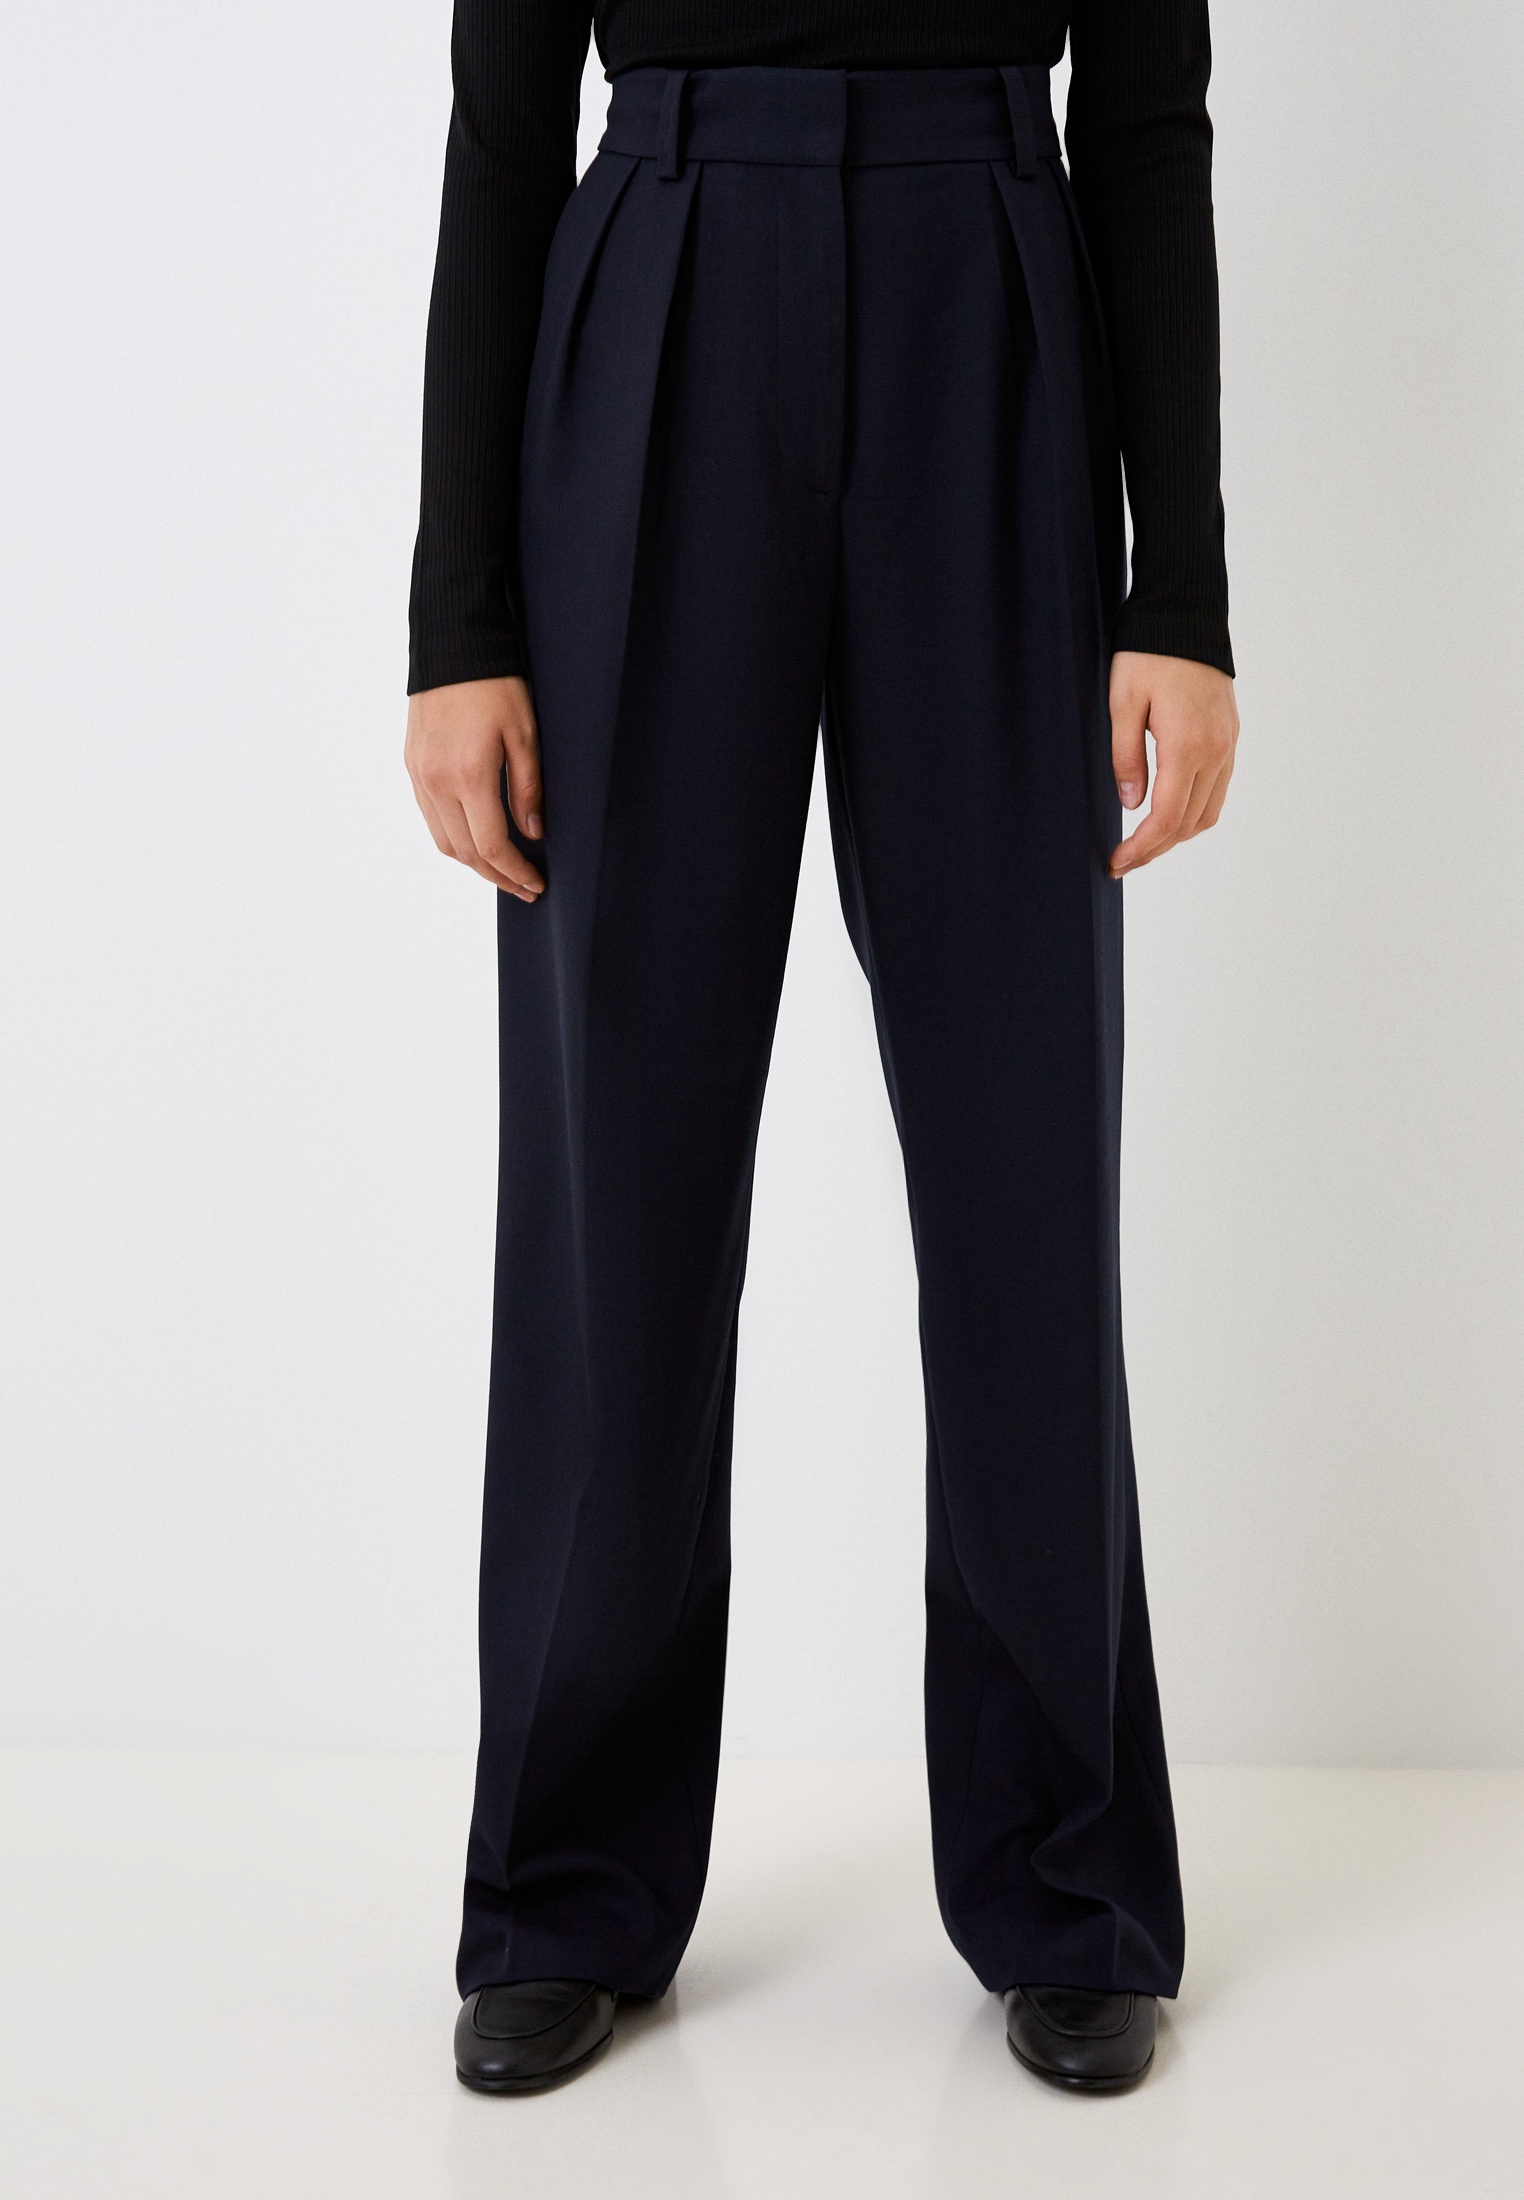 Женские классические брюки Tommy Hilfiger (Томми Хилфигер) WW0WW39725